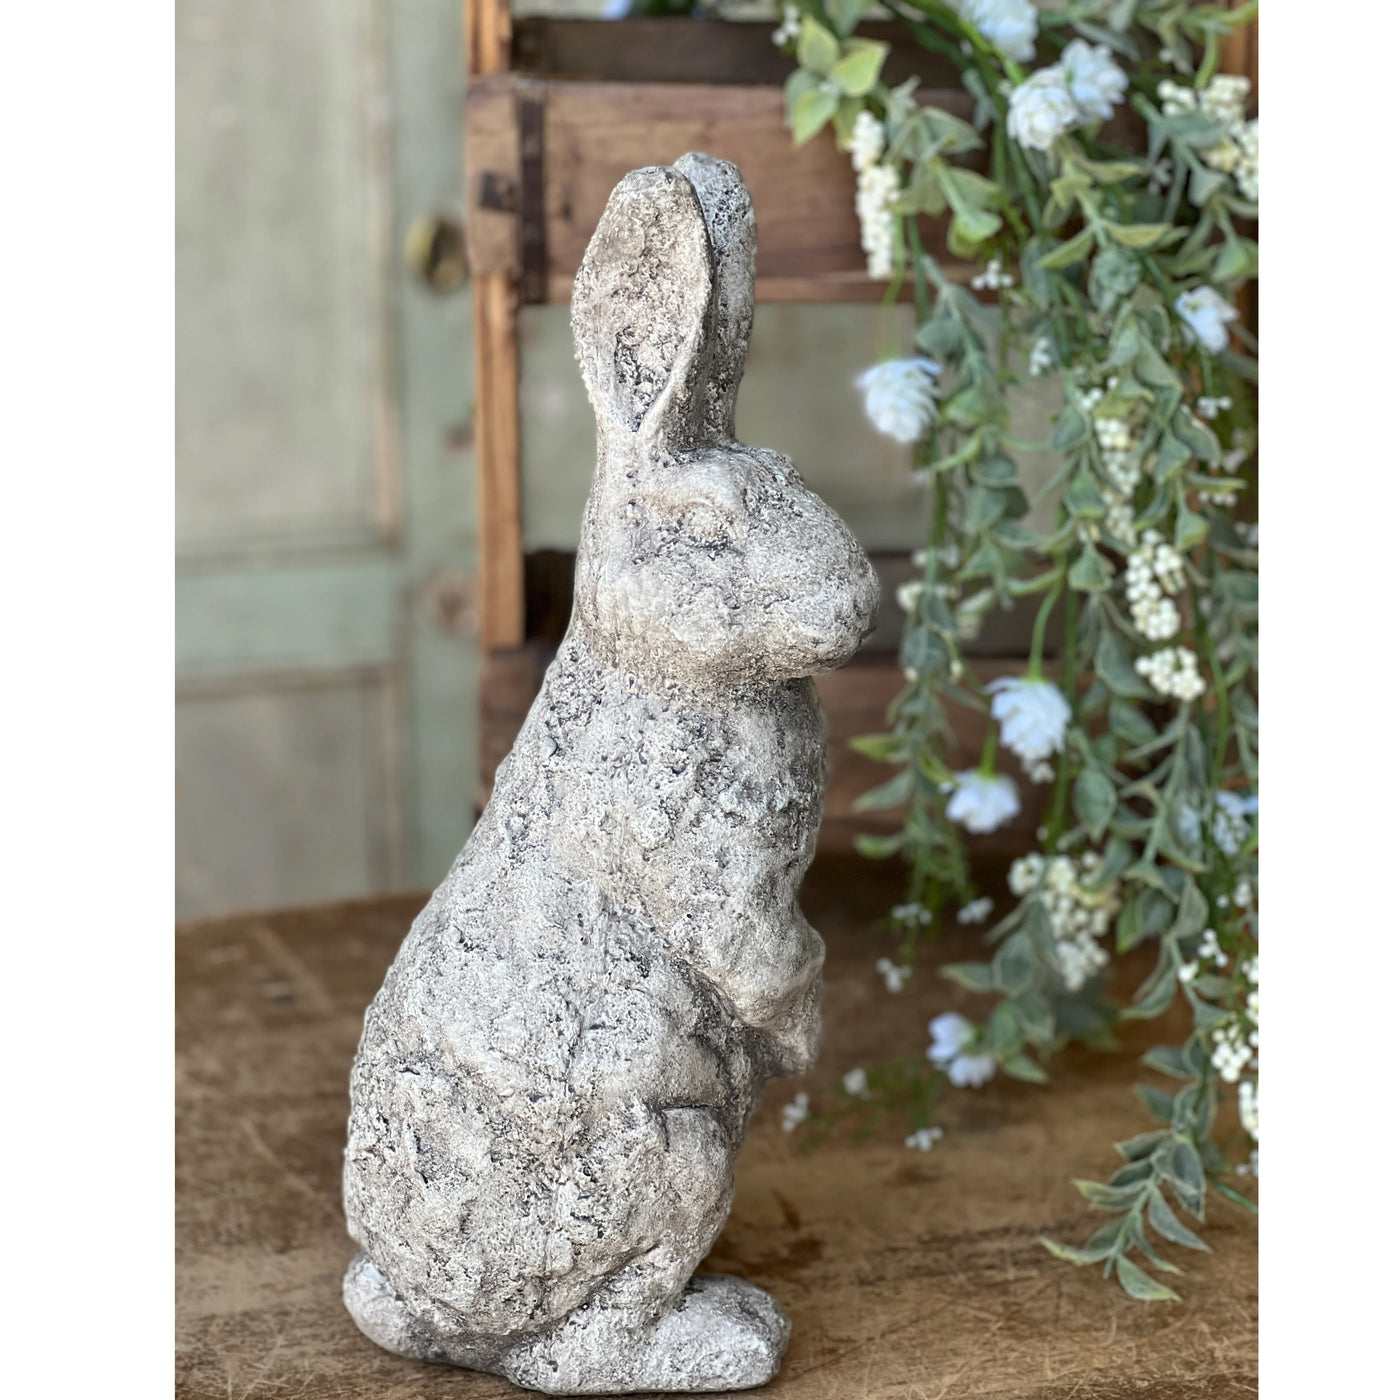 The Standing Alba Rabbit